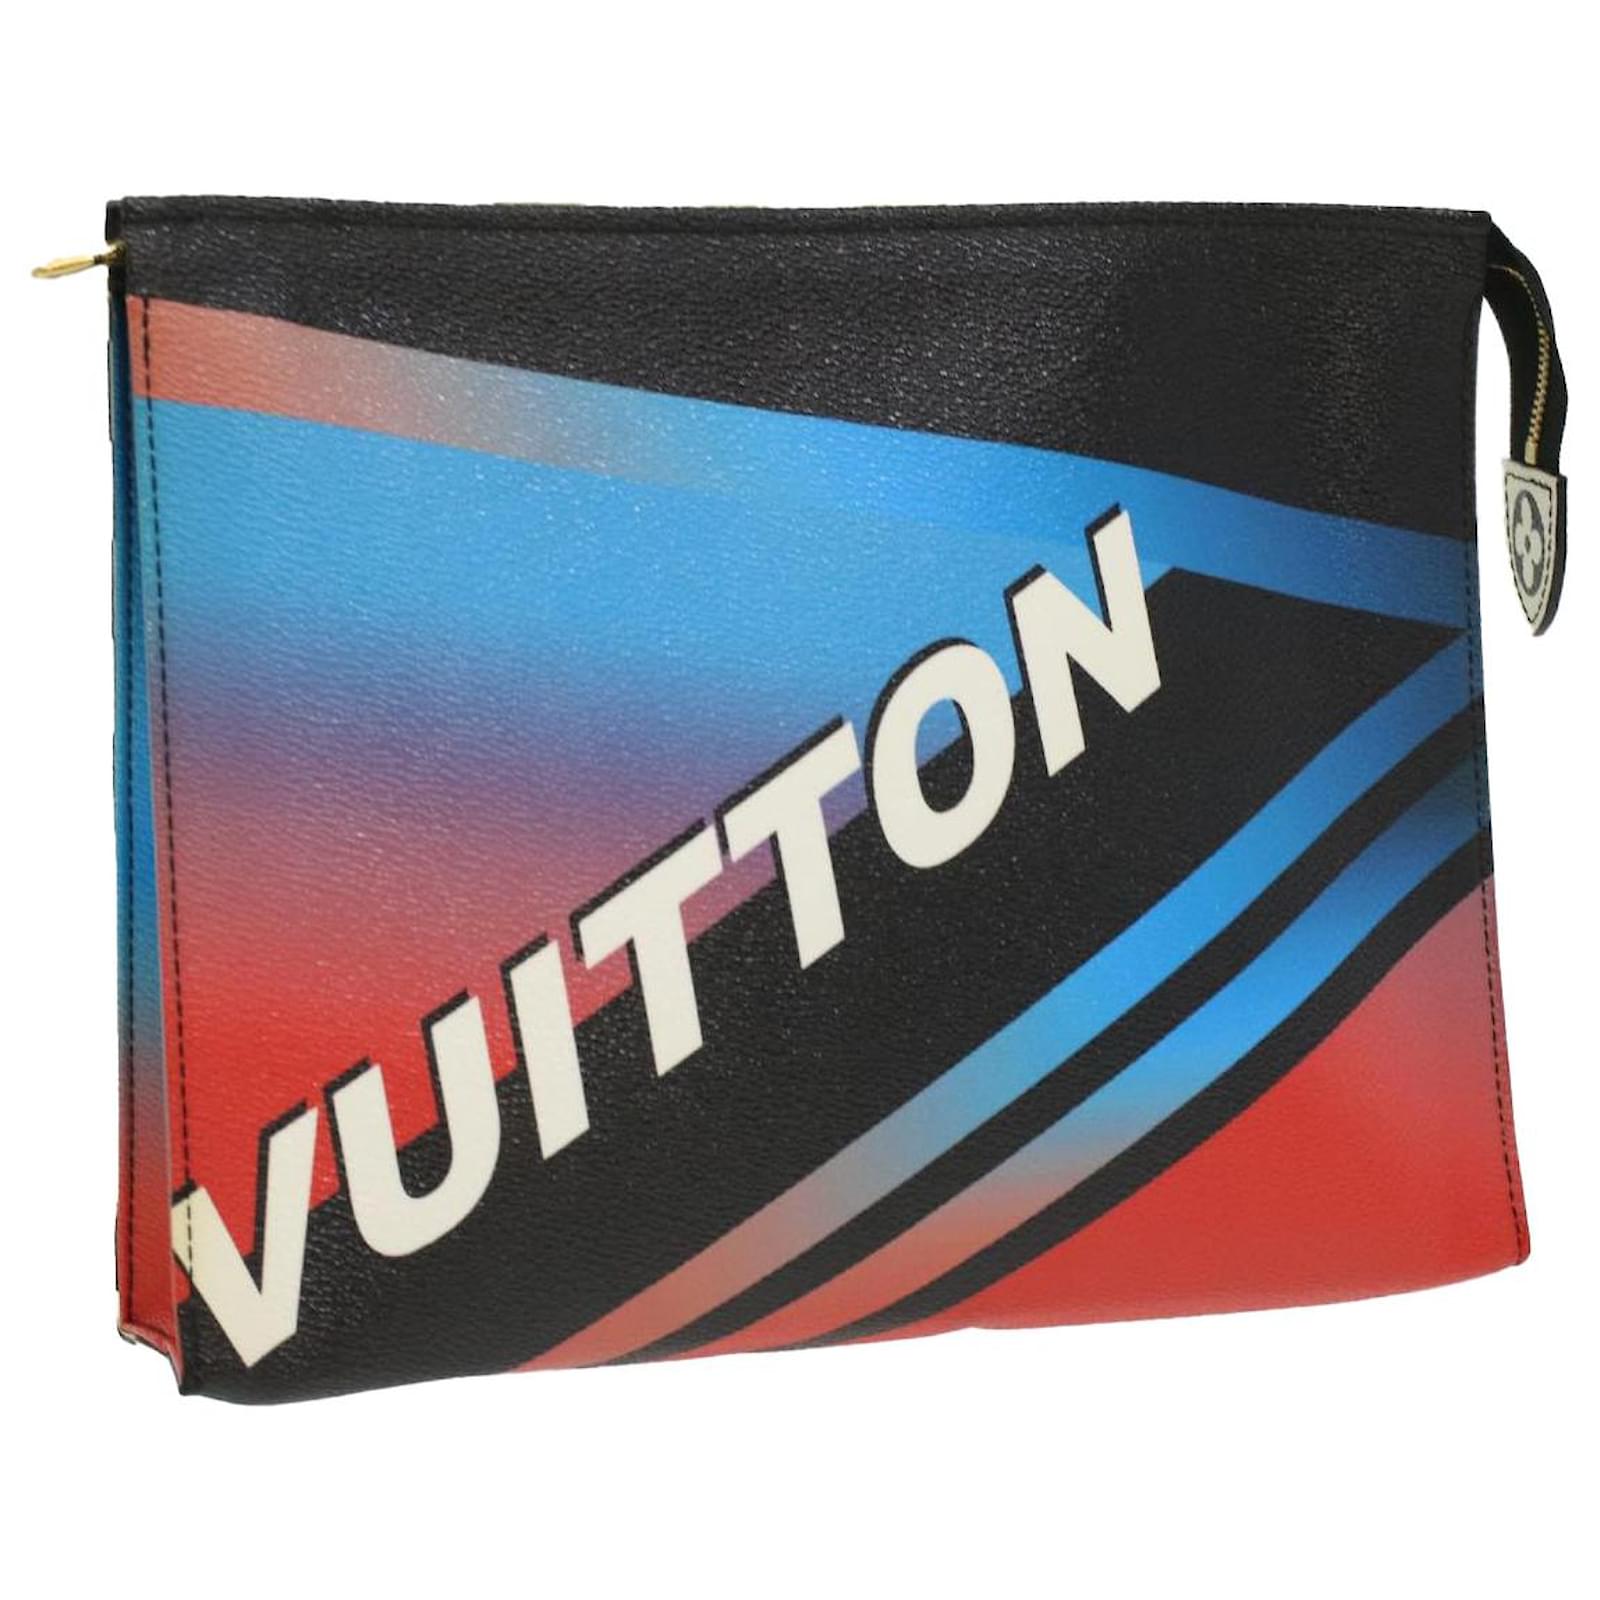 Louis Vuitton Limited Edition Sofia Coppola Clutch and Handbag